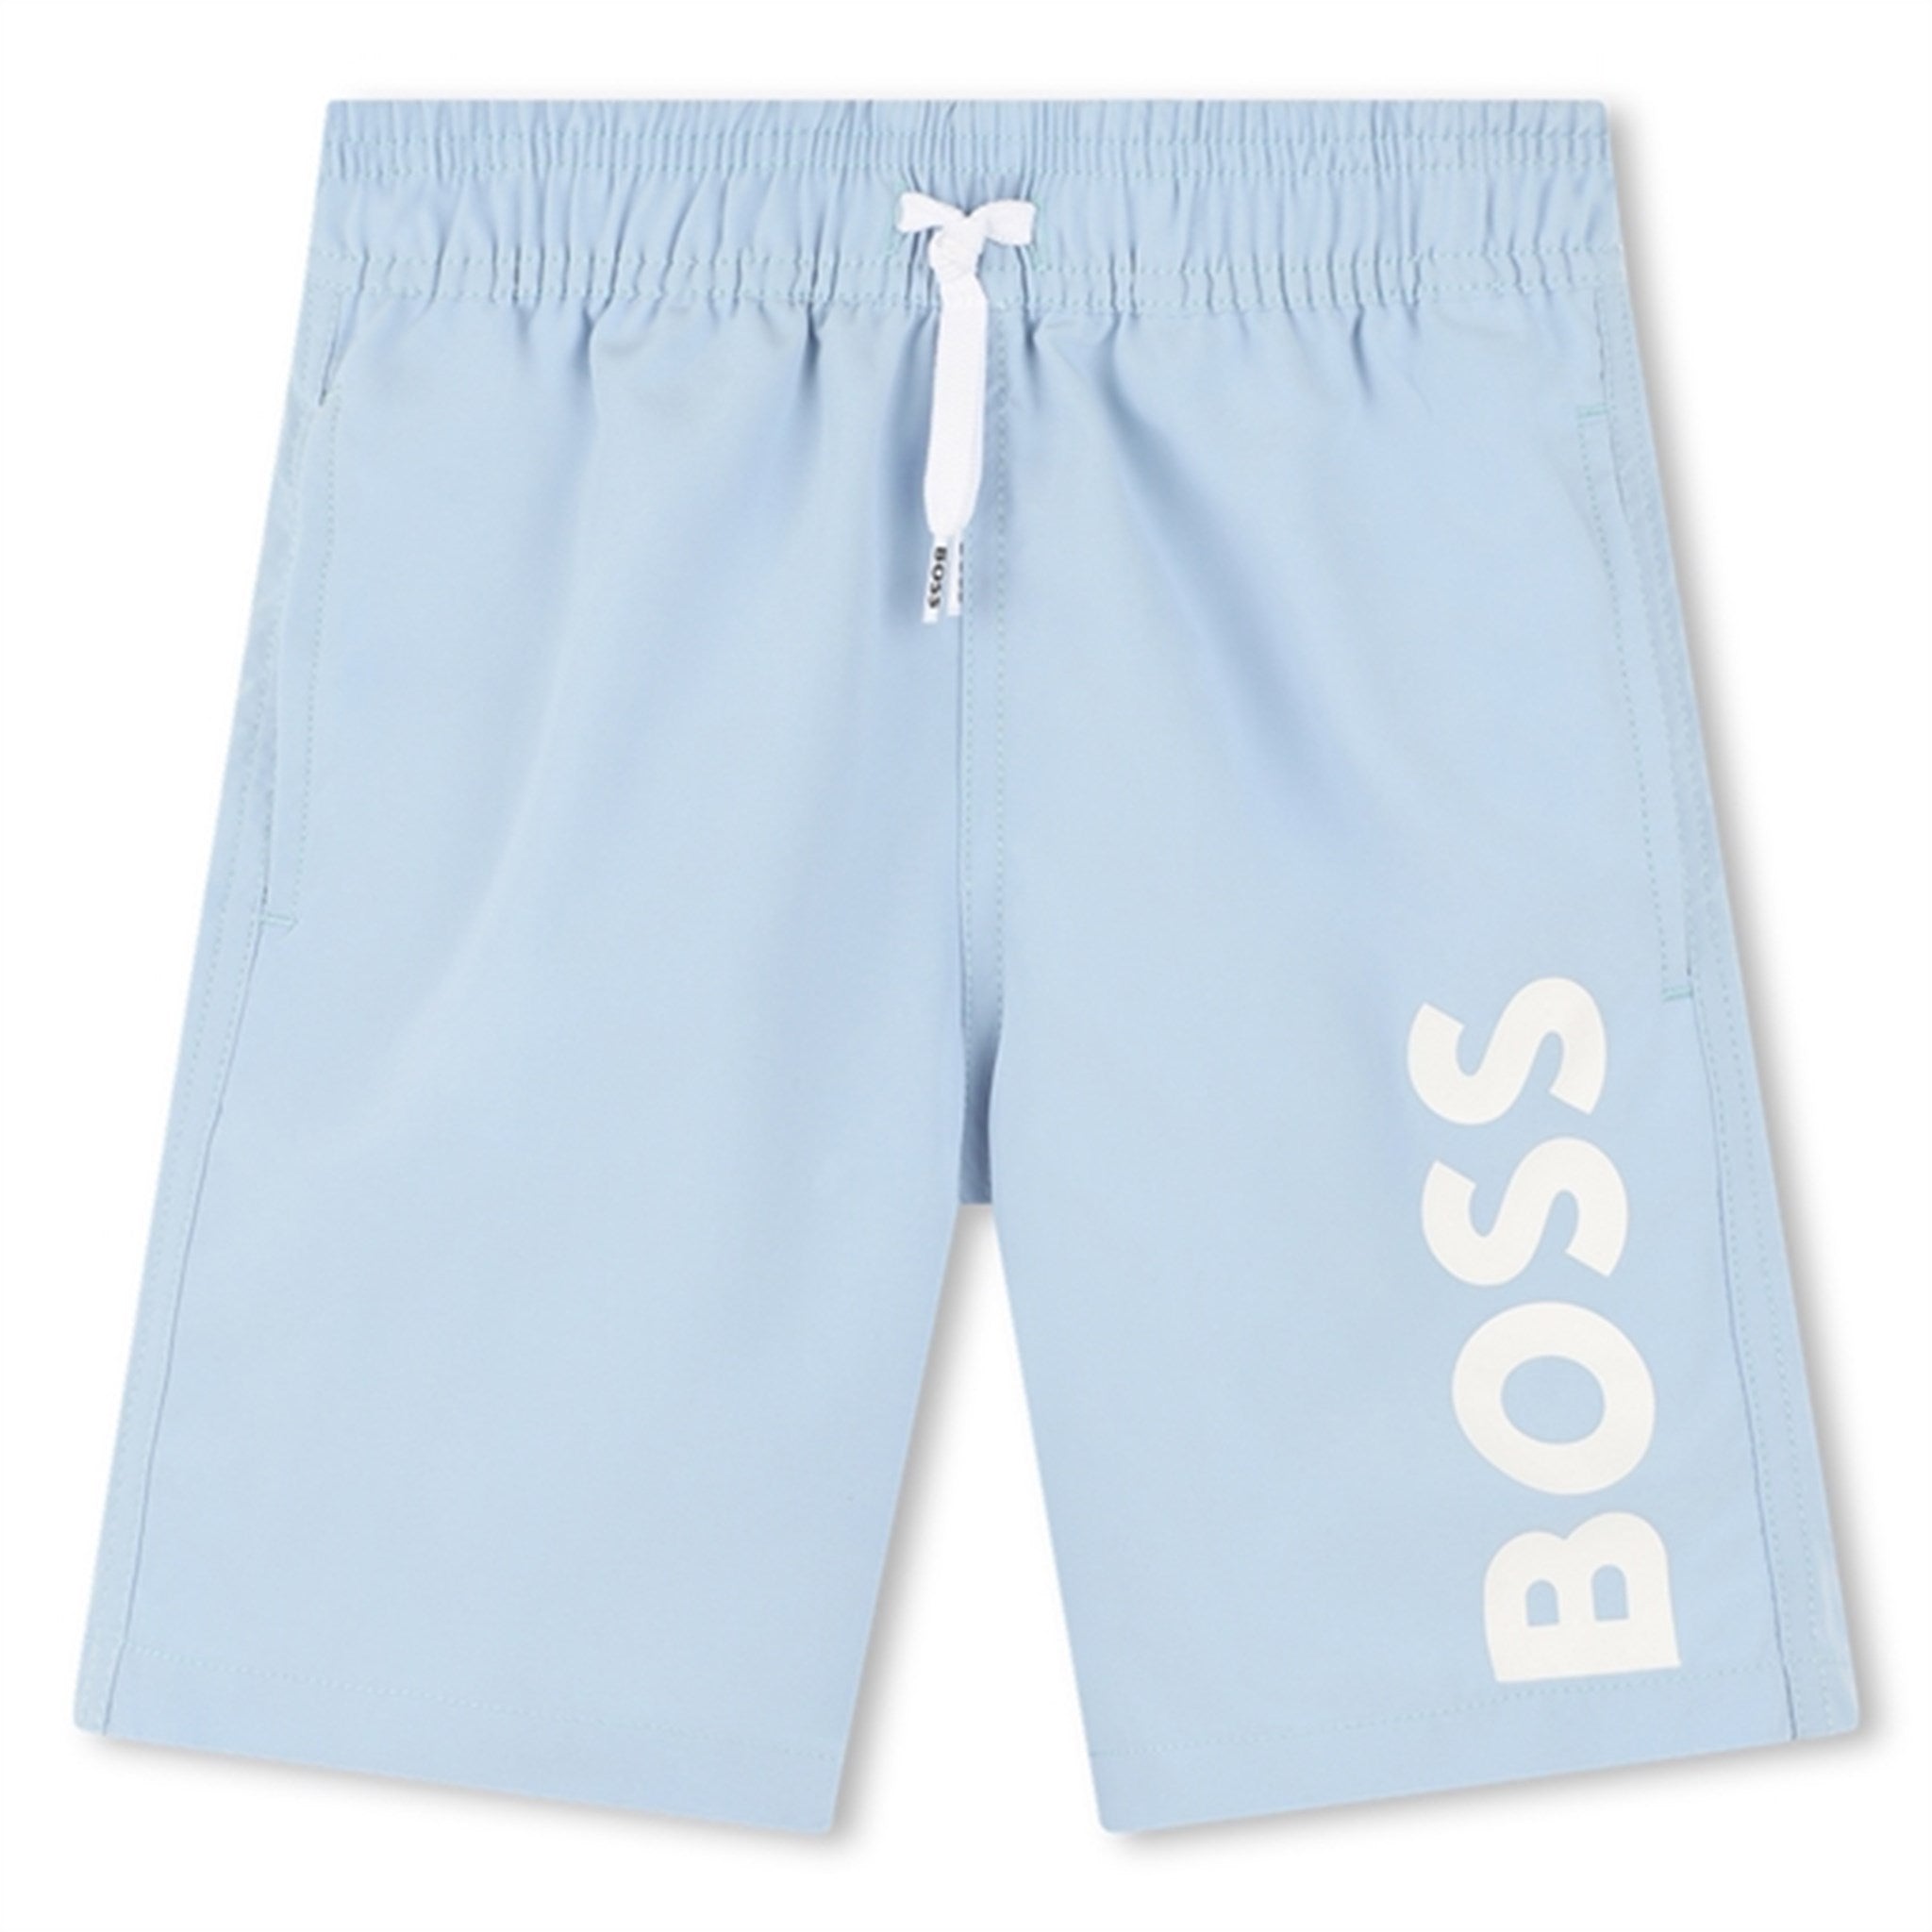 Hugo Boss Pale Blue Badeshorts